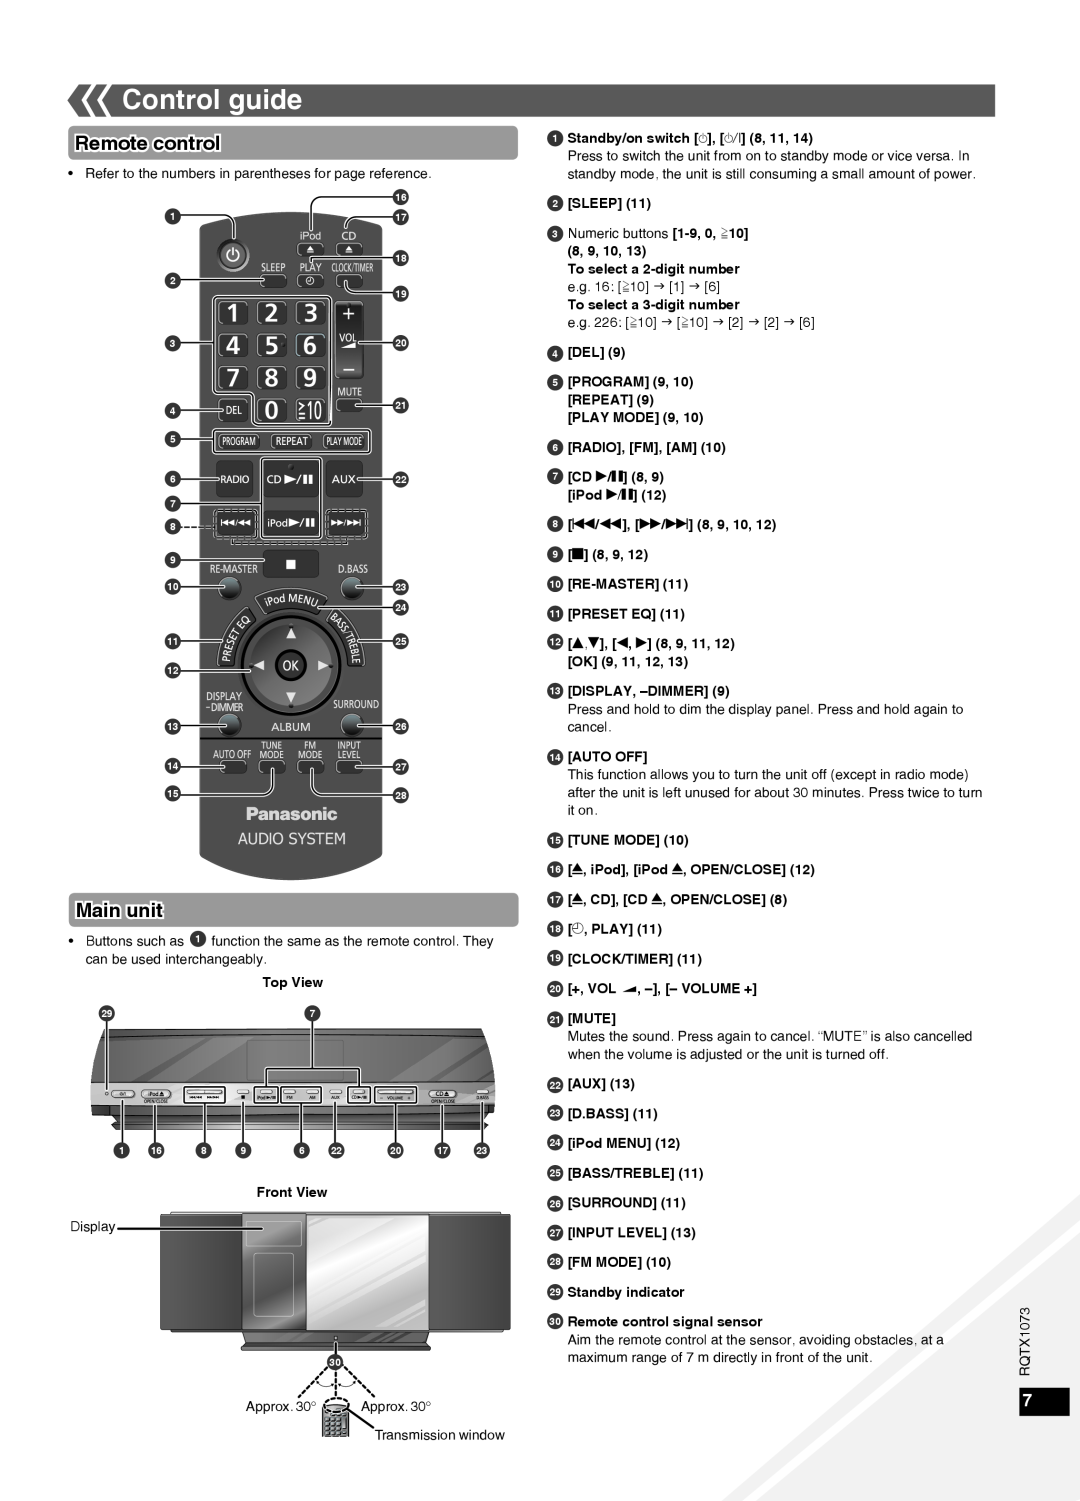 Panasonic SC-HC30 manual Control guide, Remote control, Main unit, Audio System 